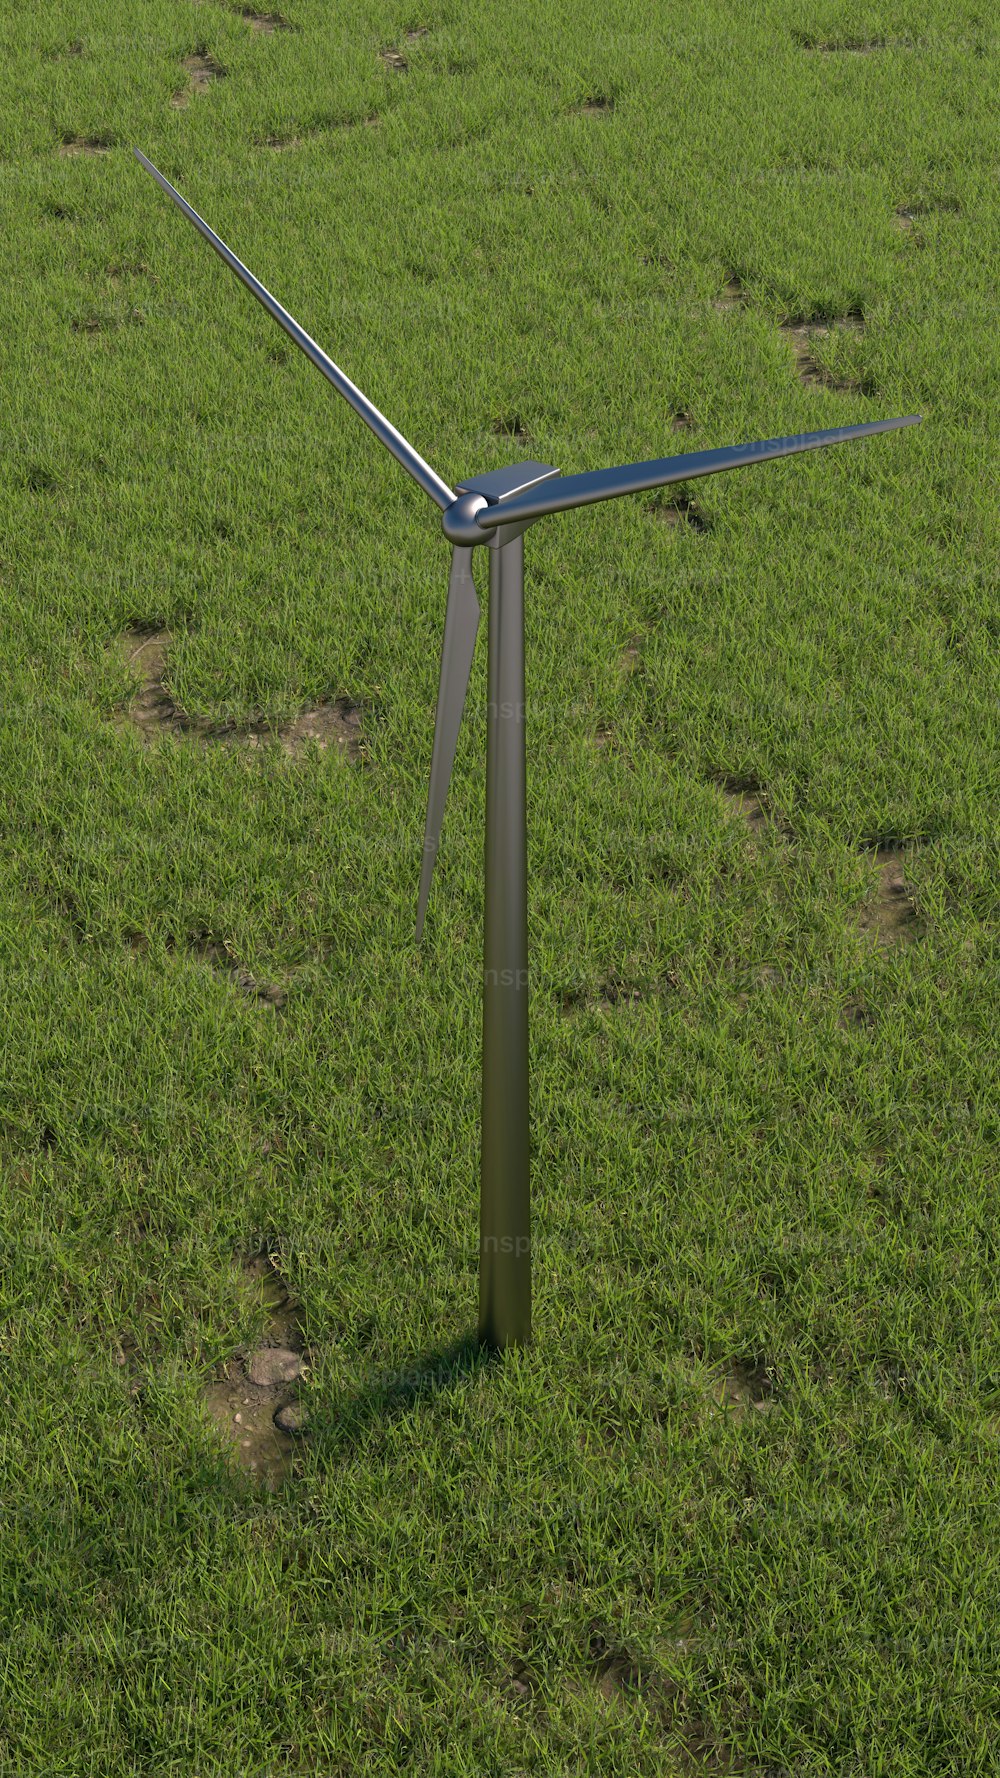 a wind turbine in a field of green grass